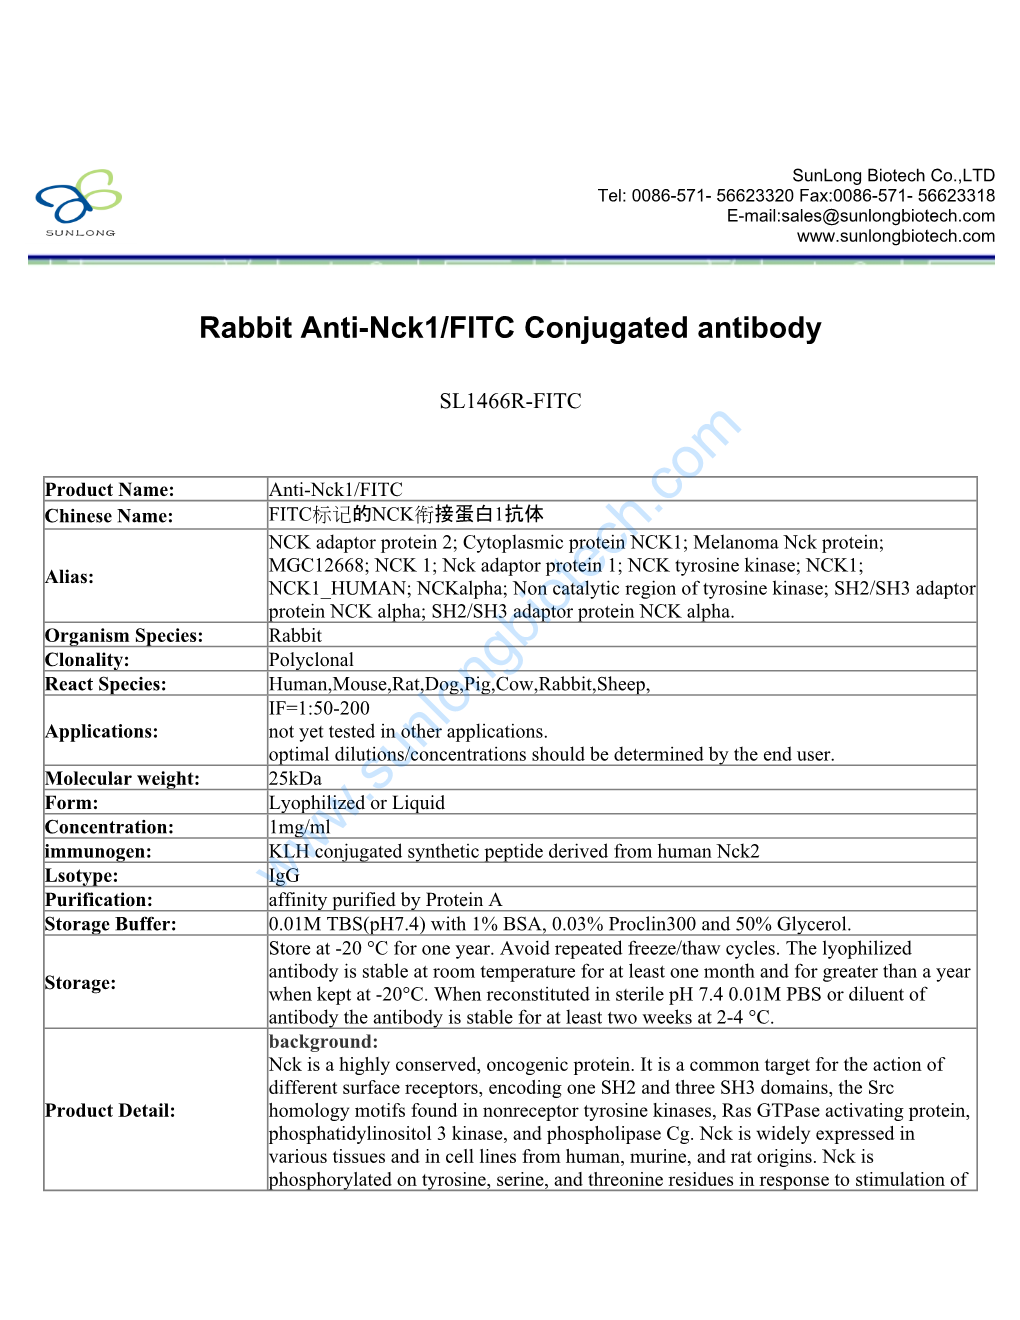 Rabbit Anti-Nck1/FITC Conjugated Antibody